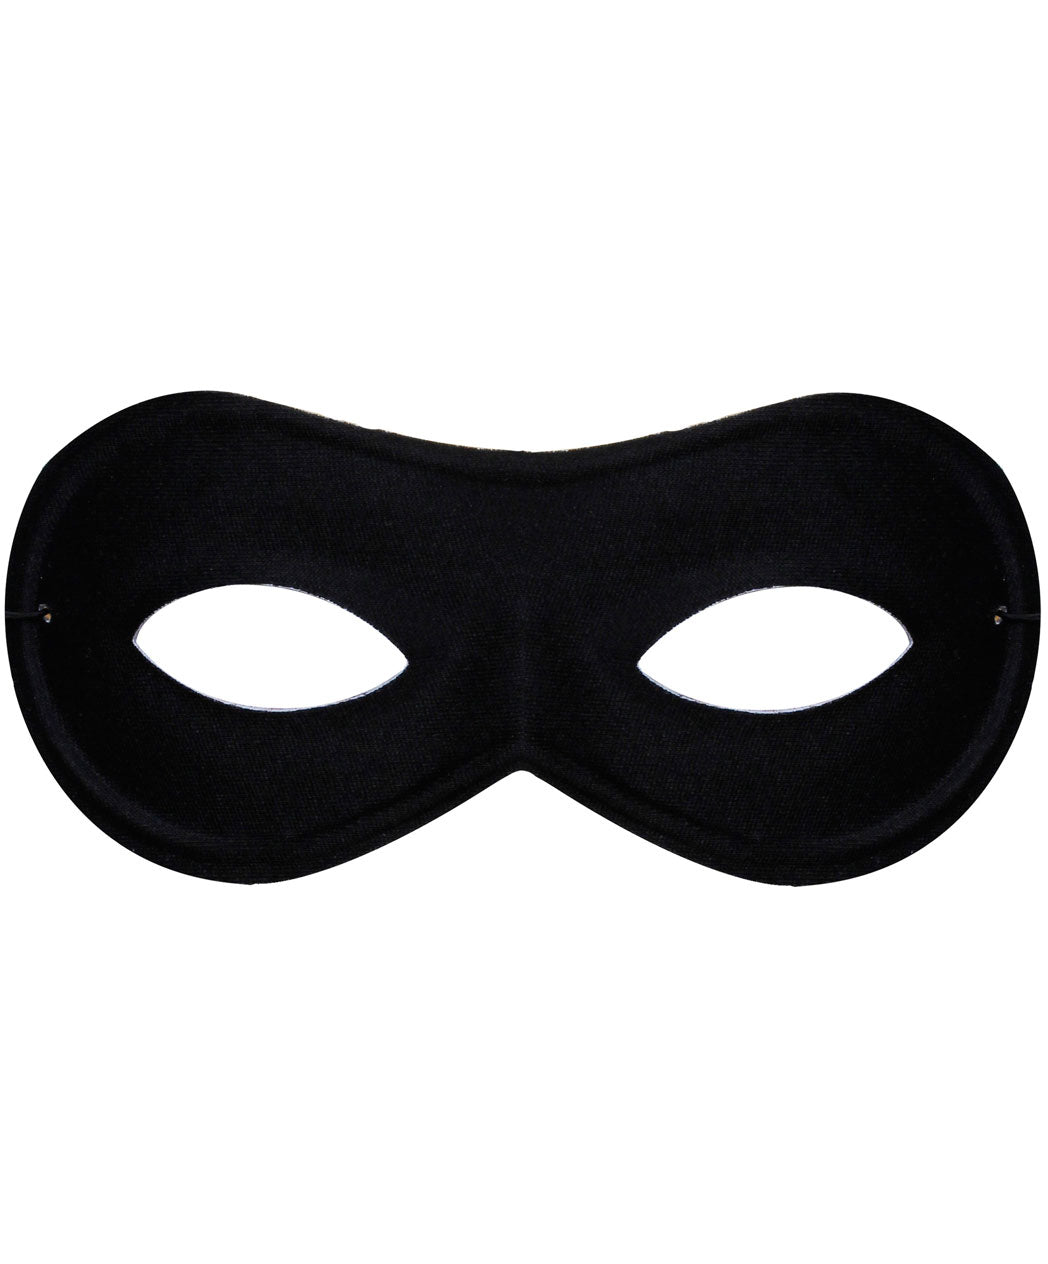 Black Superhero Mask